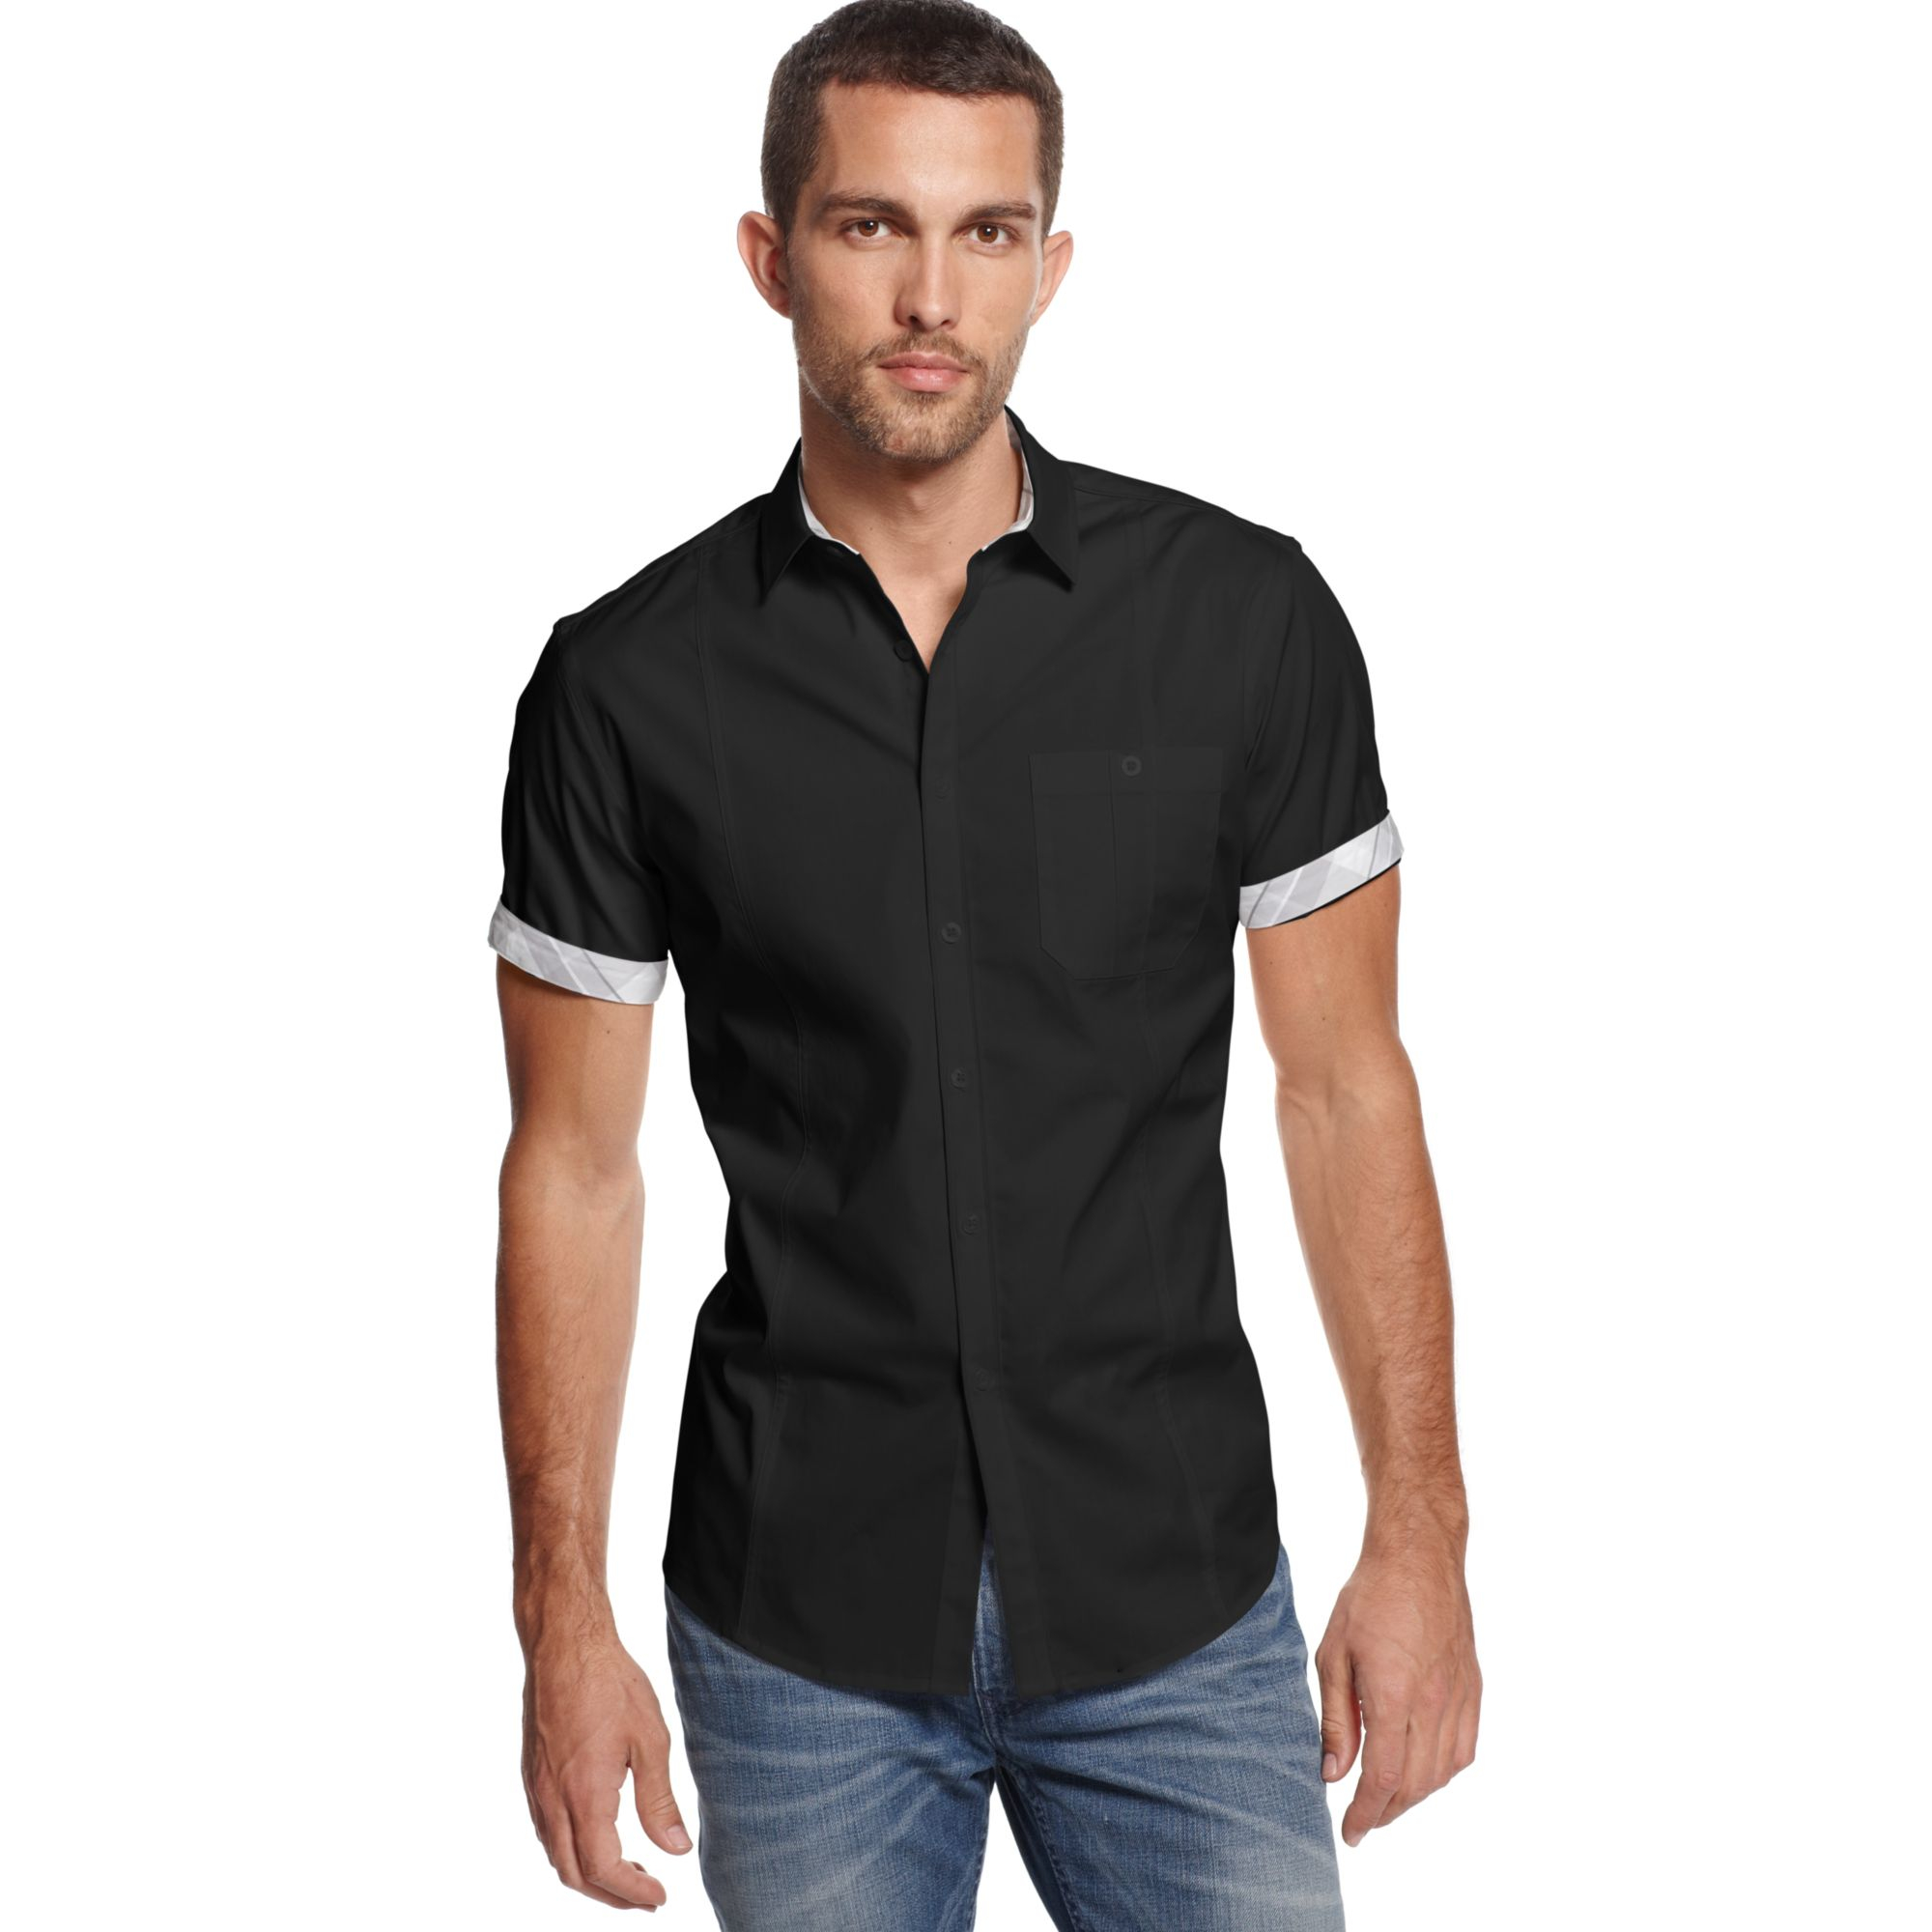 Lyst - Inc international concepts Lywin Slimfit Stretch Shirt in Black ...